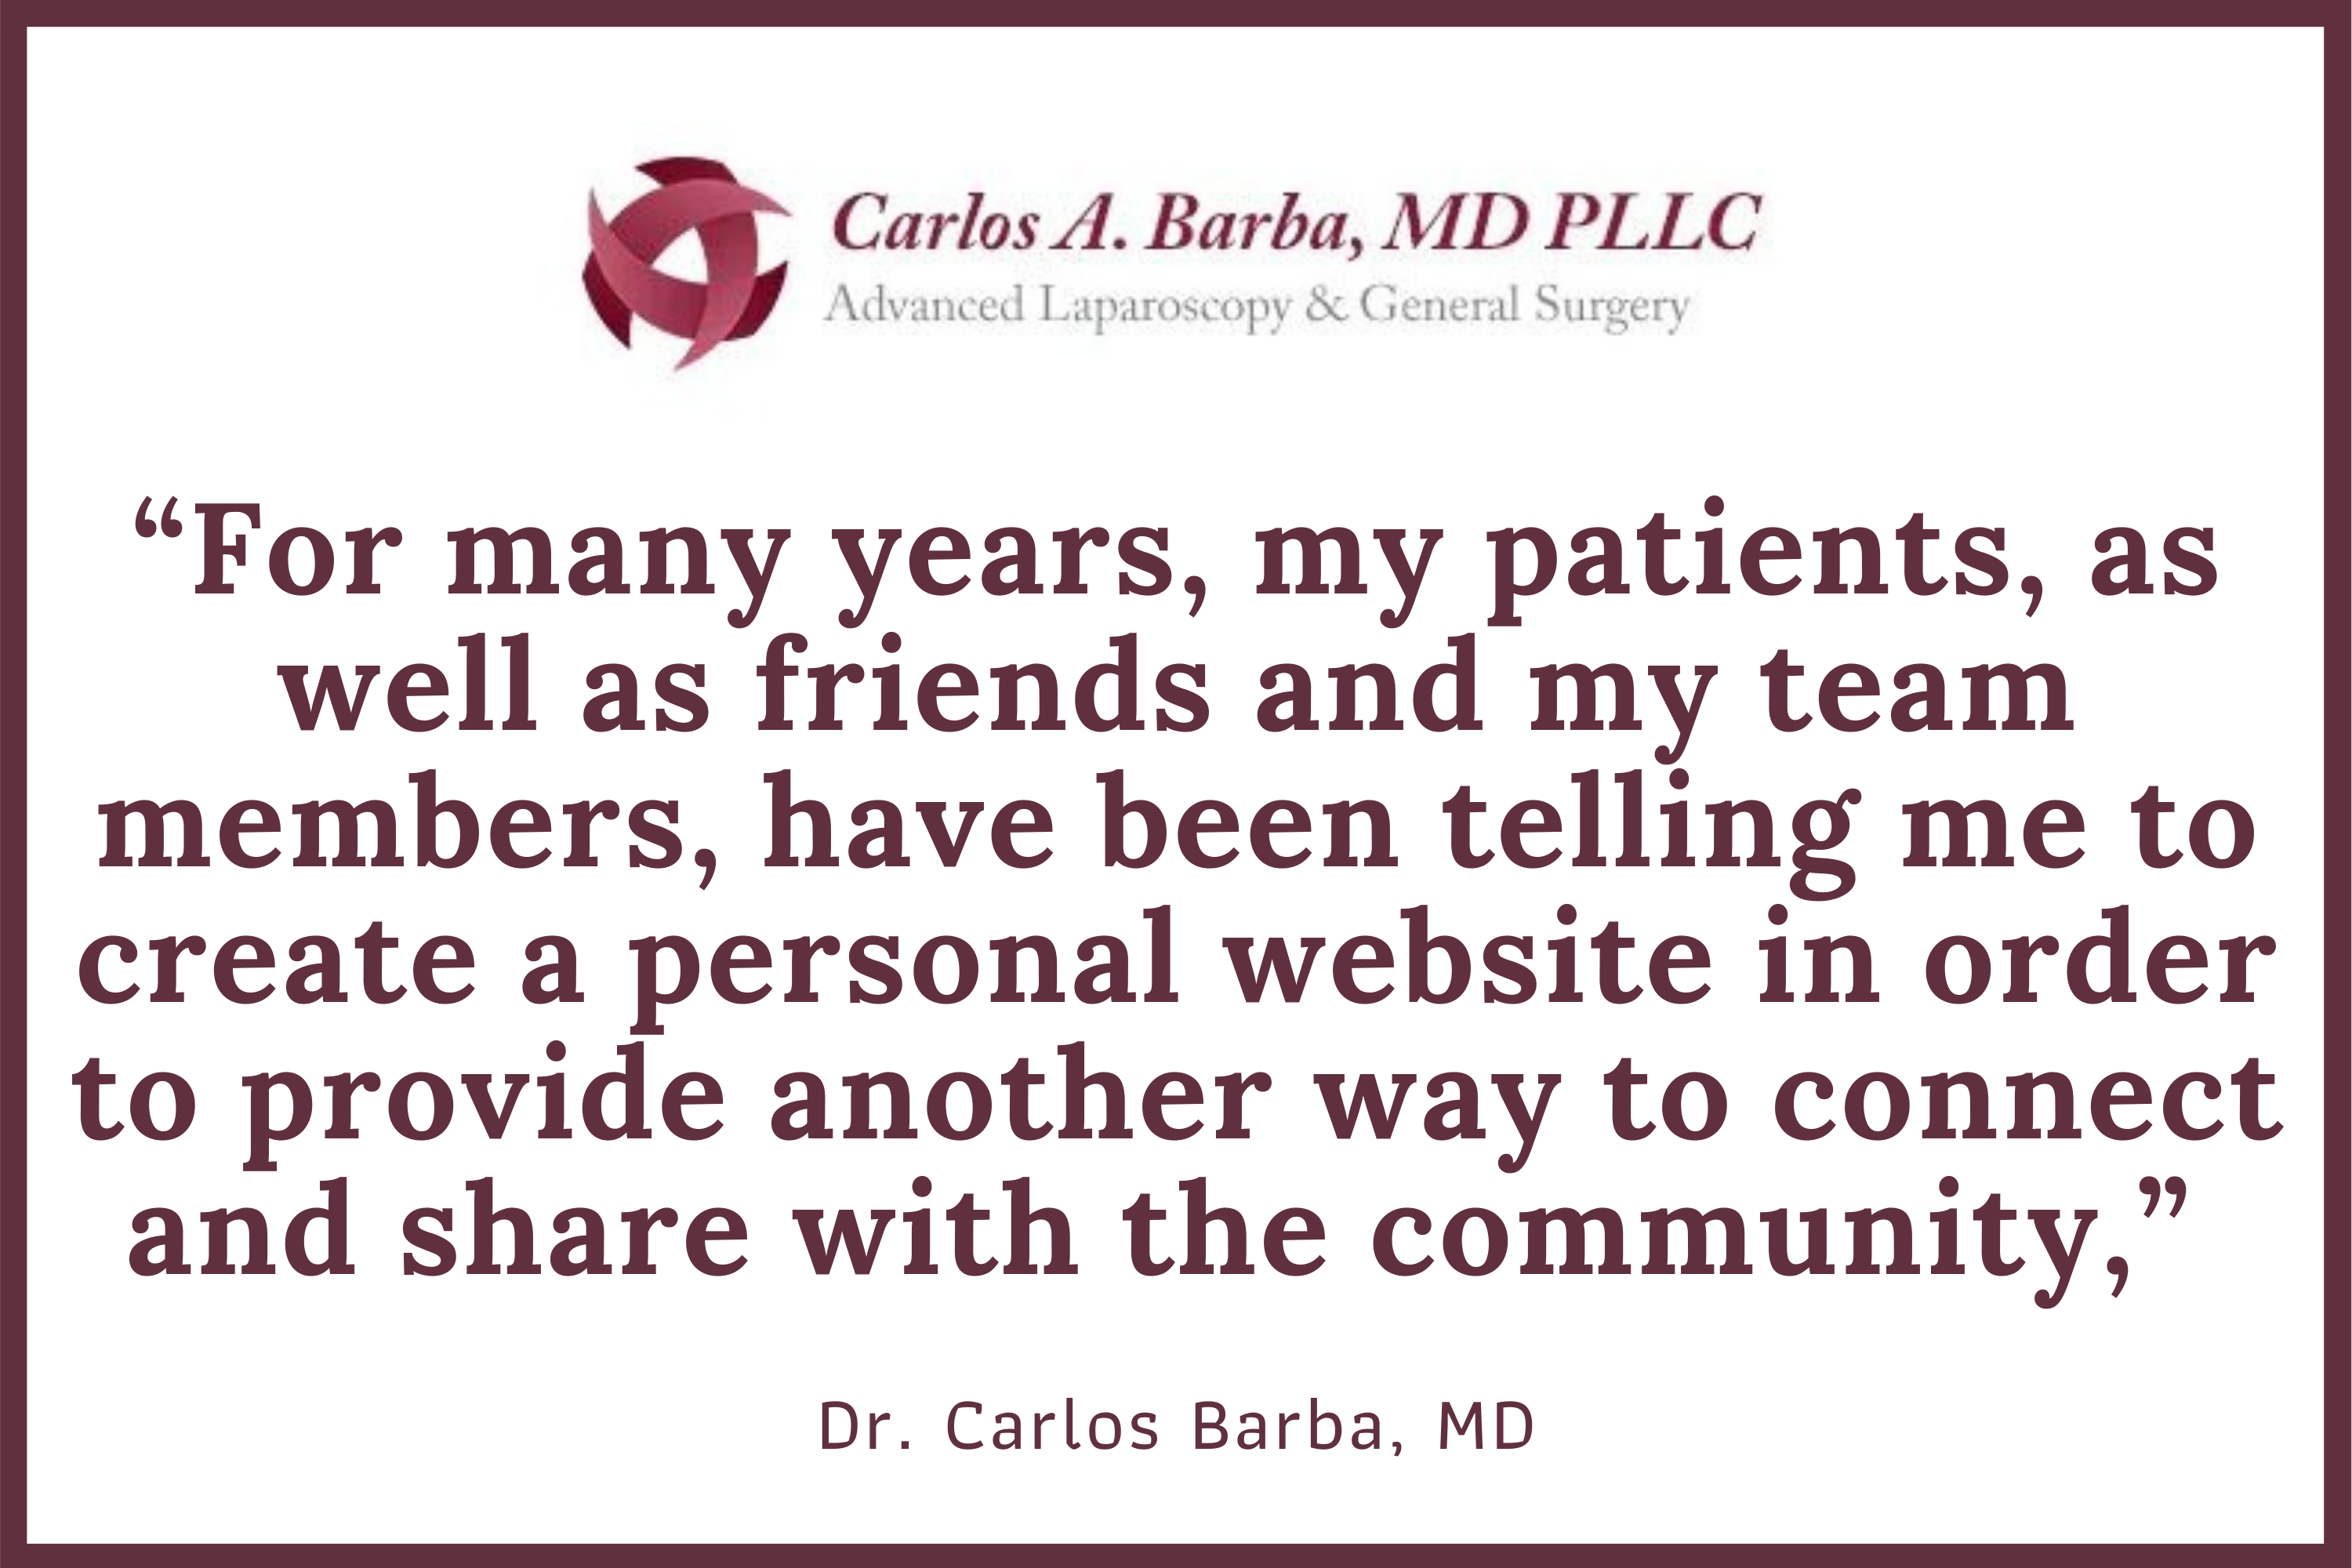 Dr. Carlos A. Barba, MD, PLLC, Friday, March 19, 2021, Press release picture